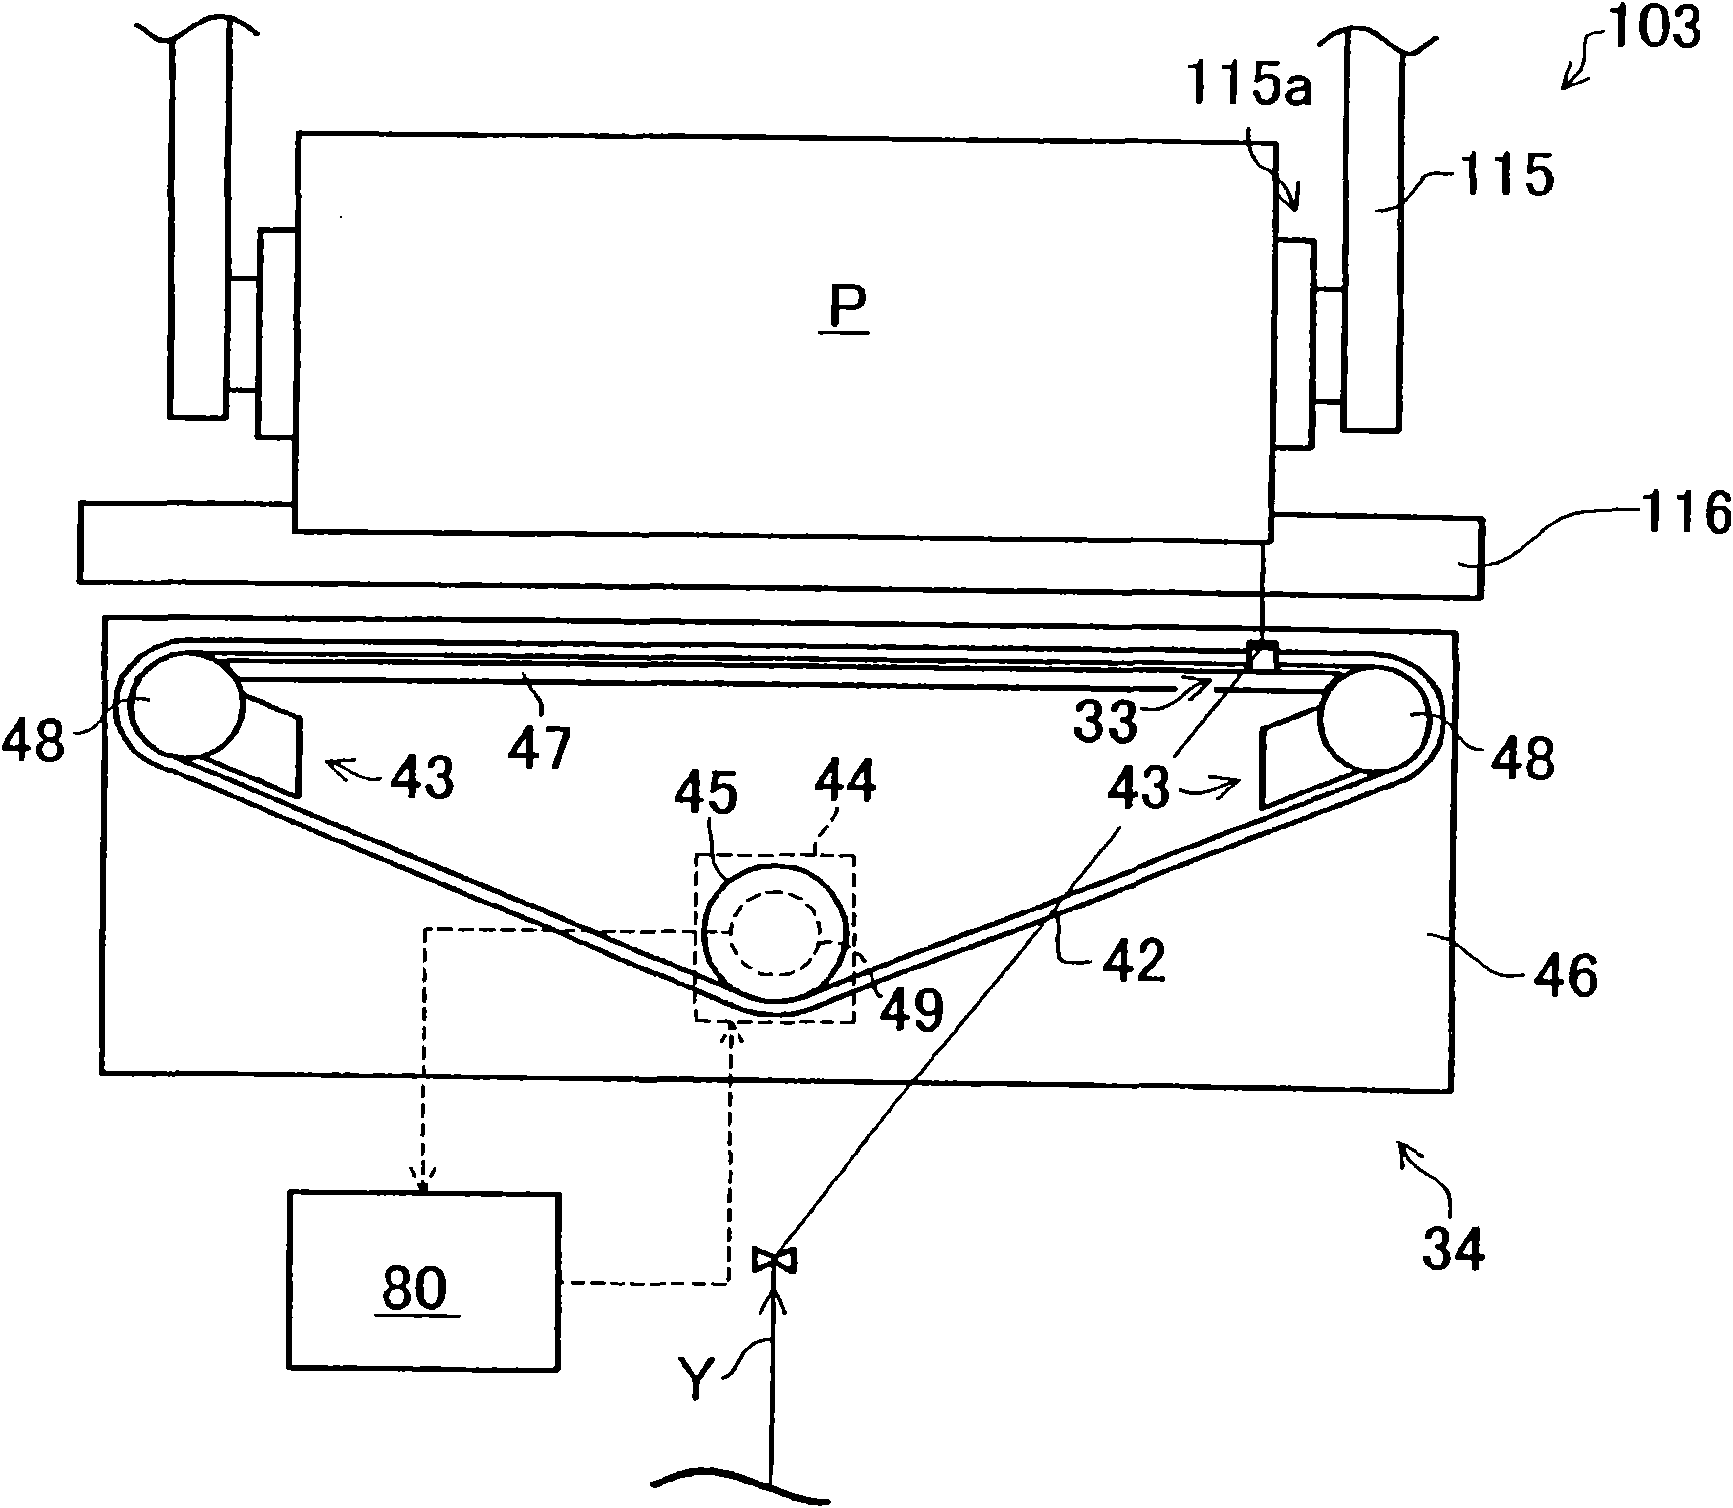 Control device of a transversing gear